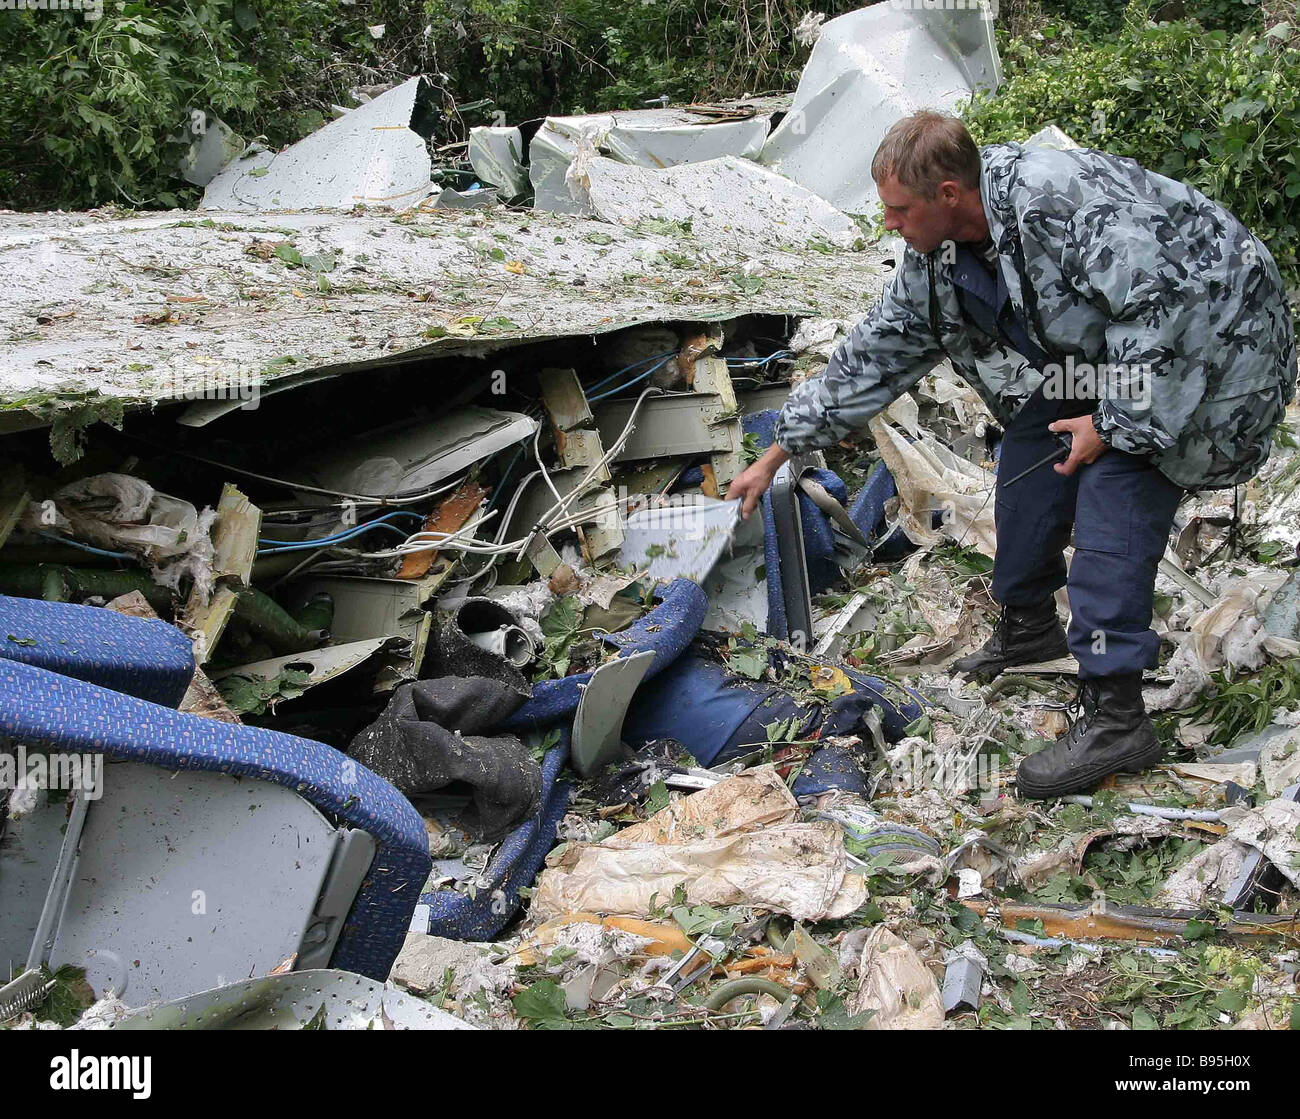 Авиакатастрофа 2004. Катастрофа ту-134 в Иванове. Катастрофа ту-154 над Боденским озером. 24 Августа 2004 авиакатастрофа.